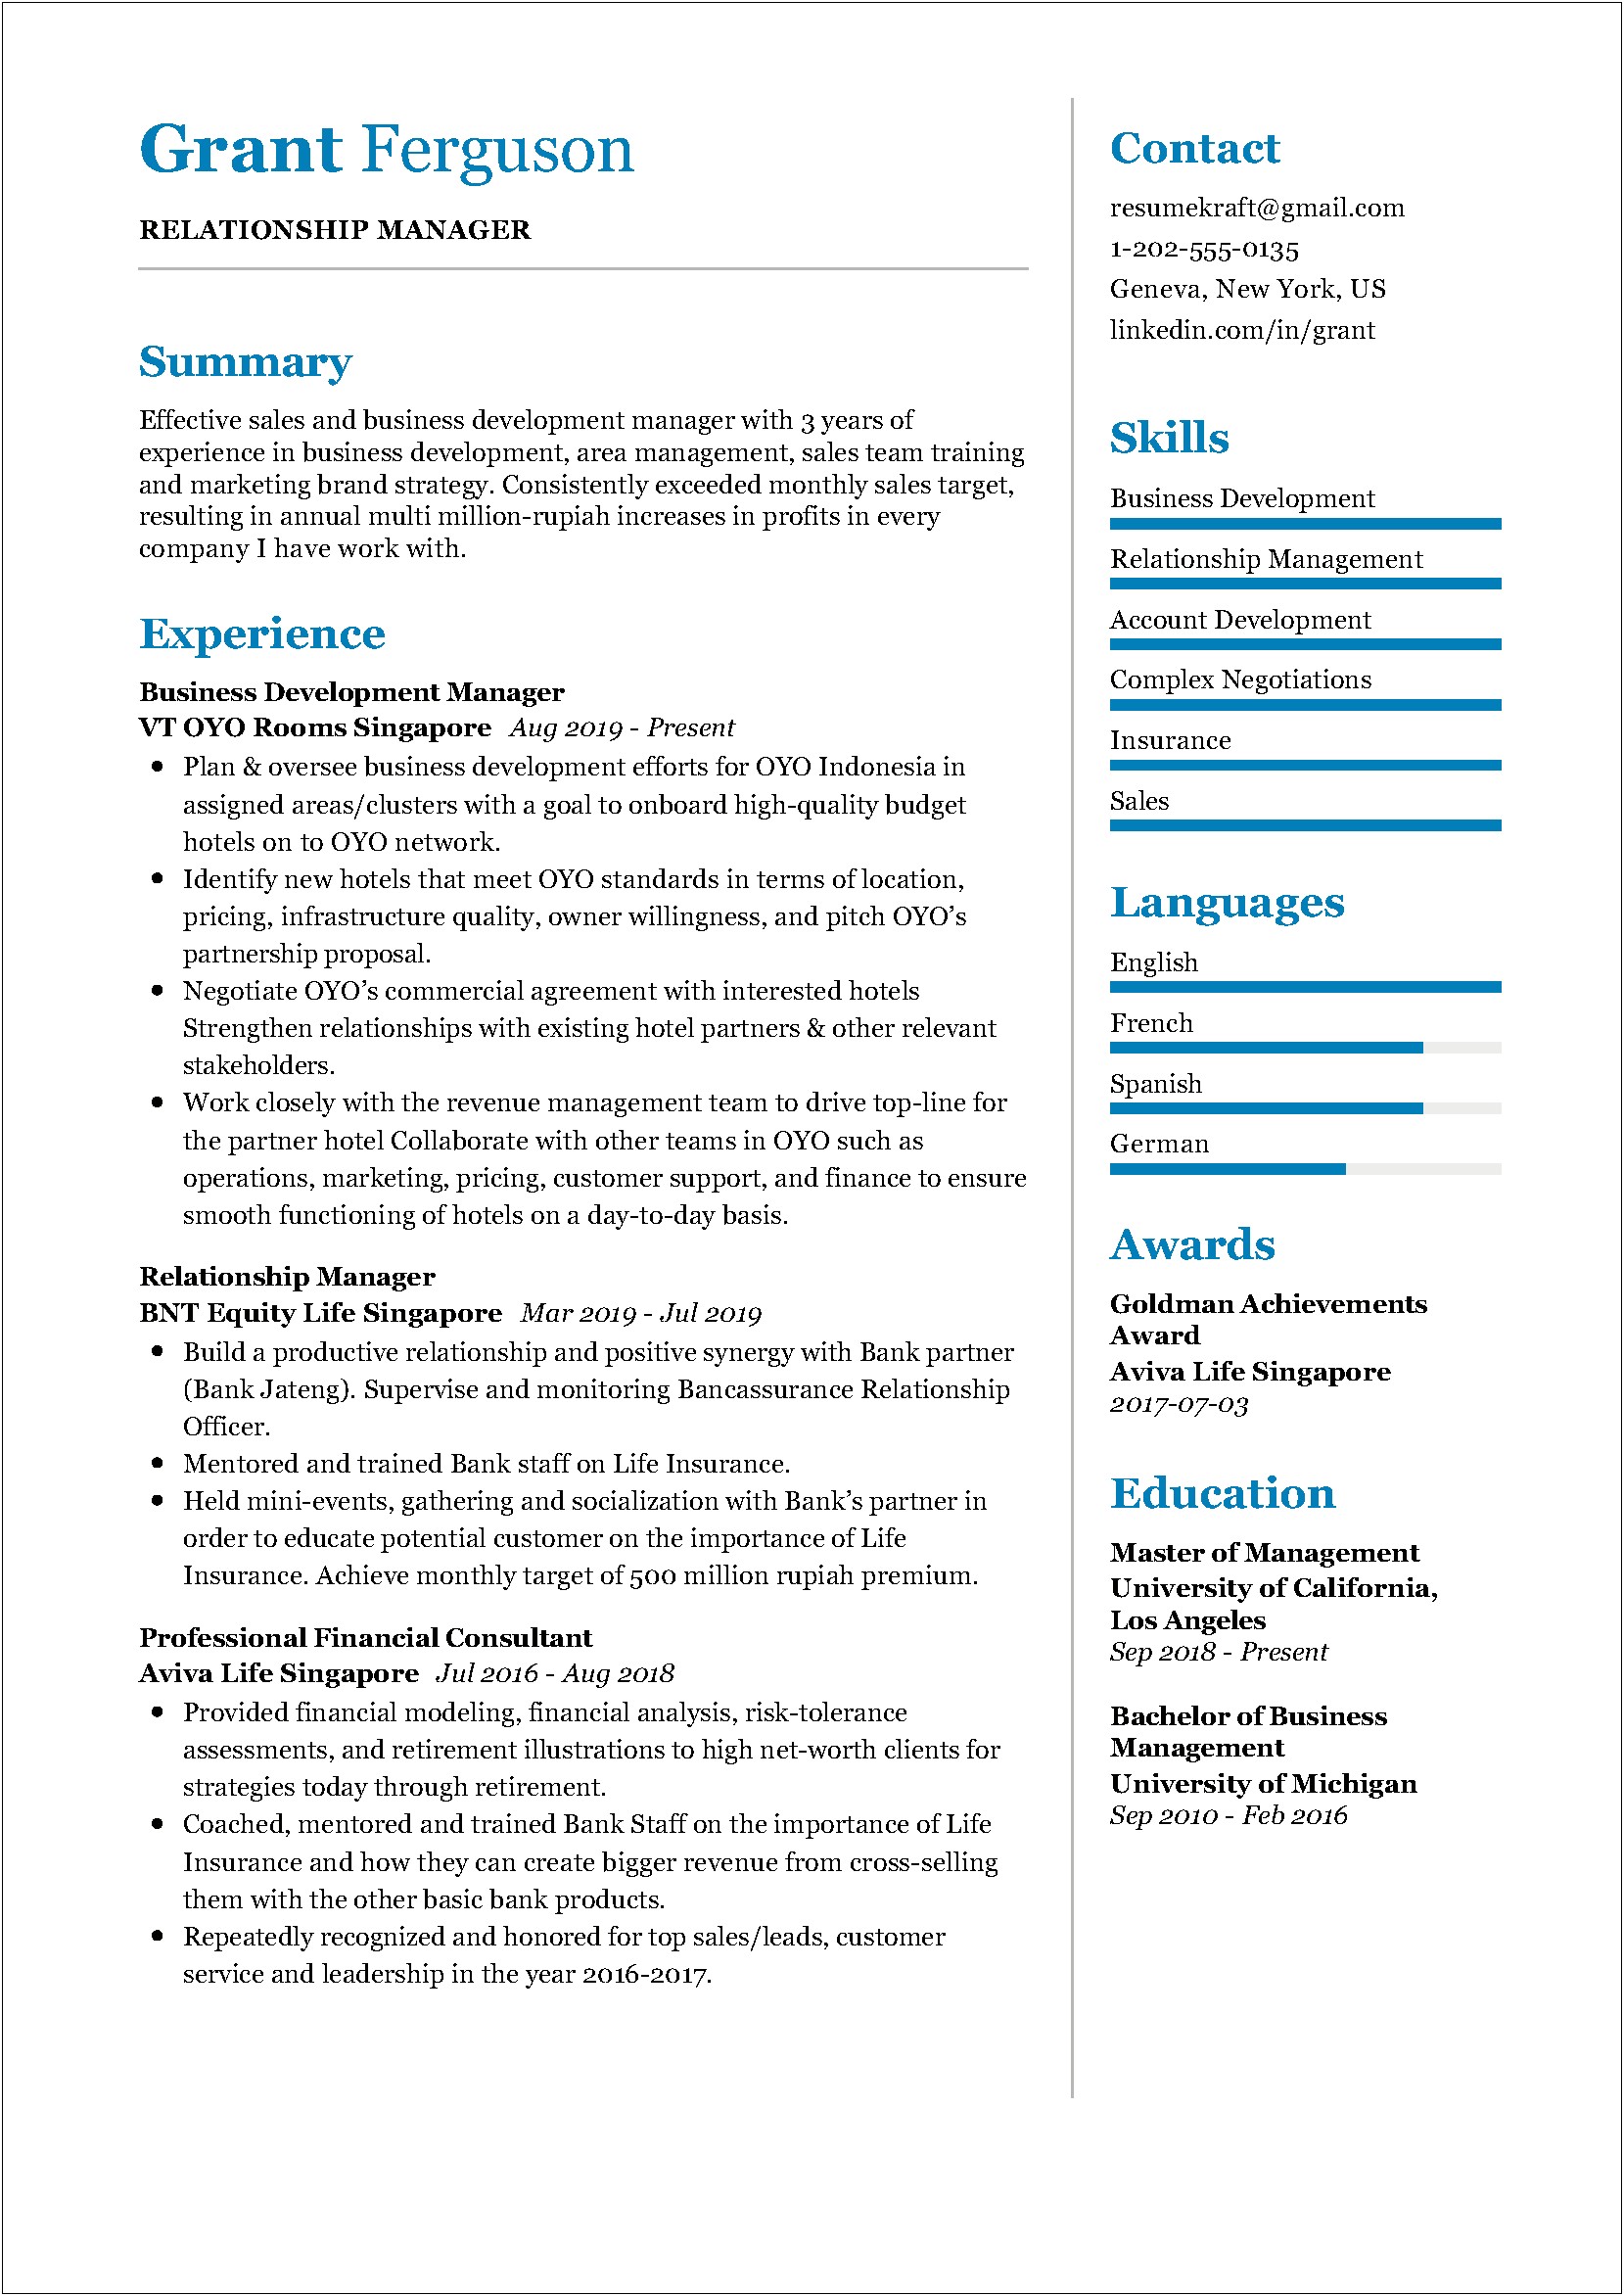 Resume Format For Media Jobs Pdf